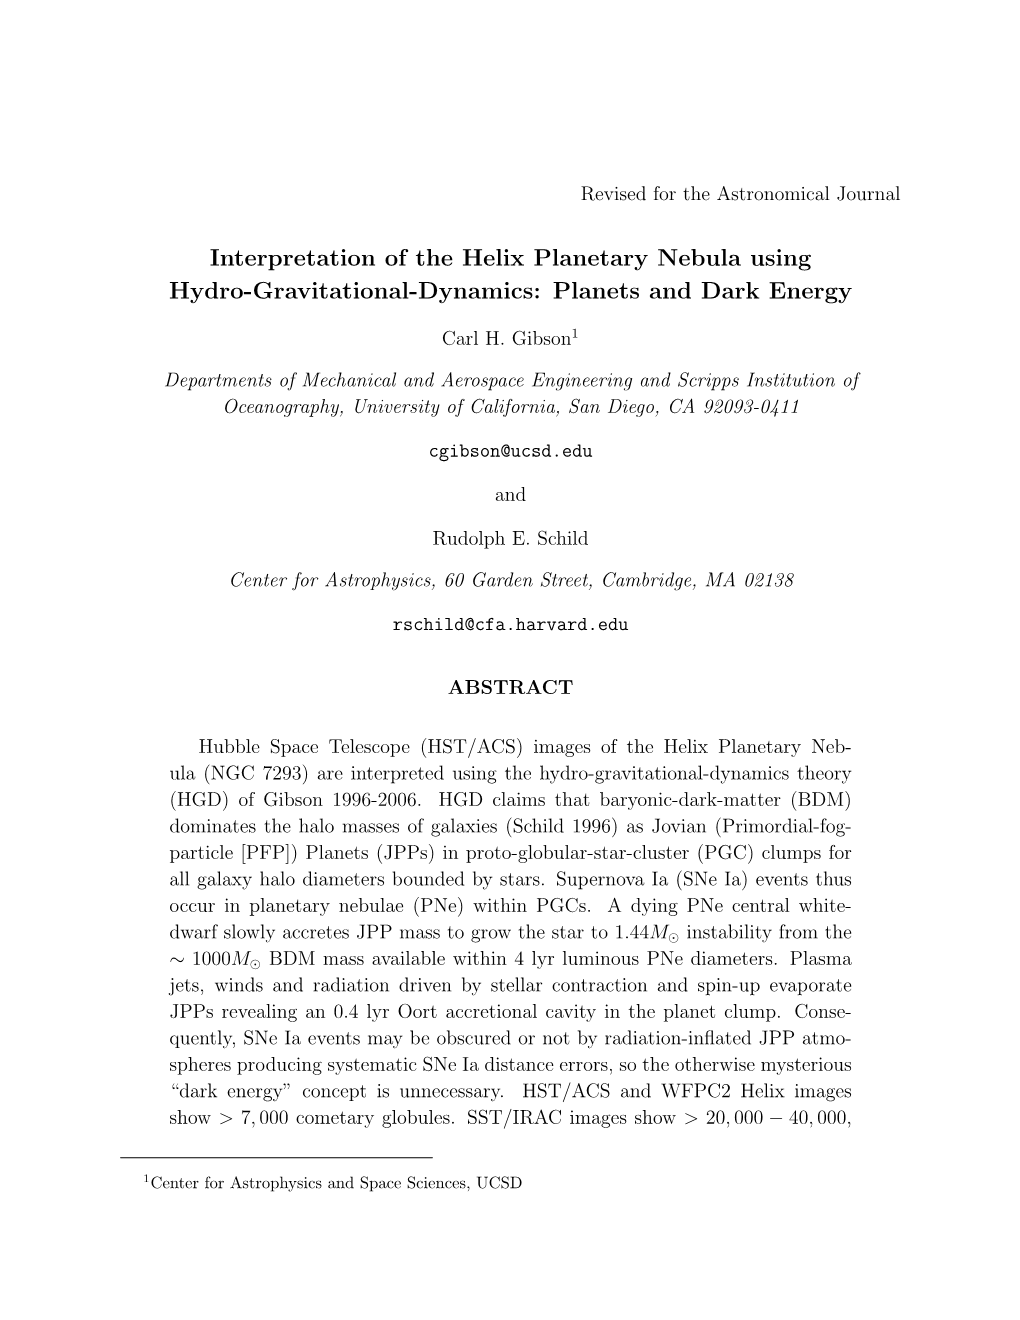 Interpretation of the Helix Planetary Nebula Using Hydro-Gravitational-Dynamics: Planets and Dark Energy